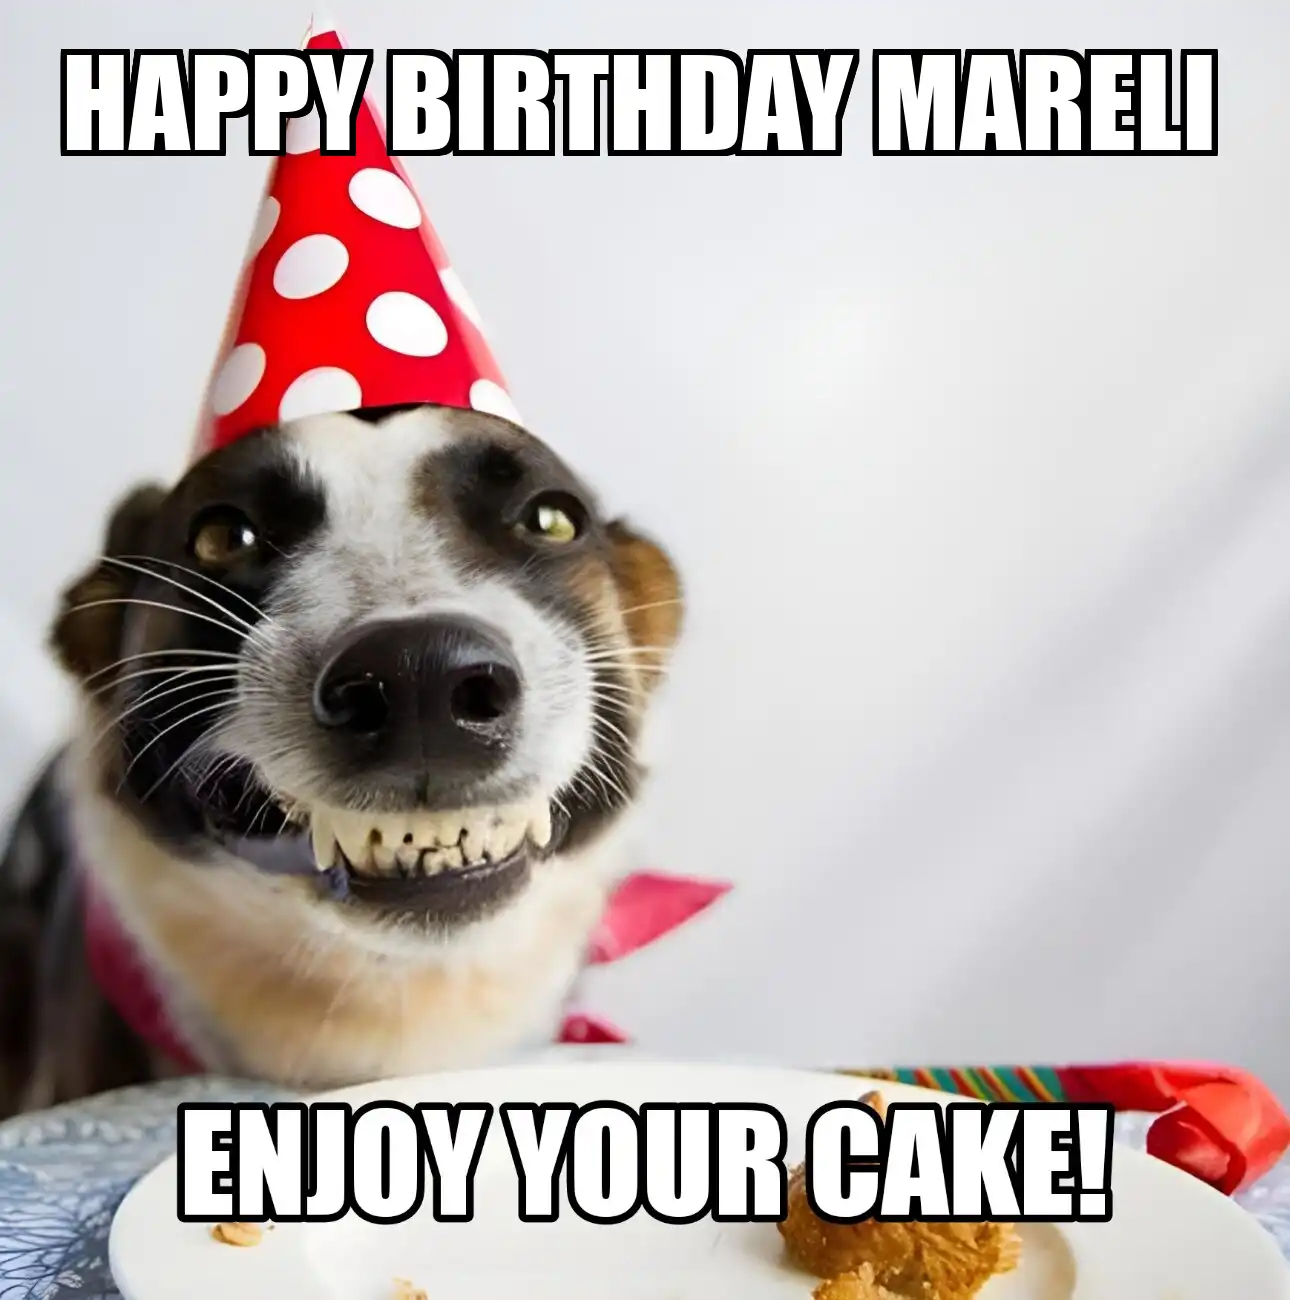 Happy Birthday Mareli Enjoy Your Cake Dog Meme